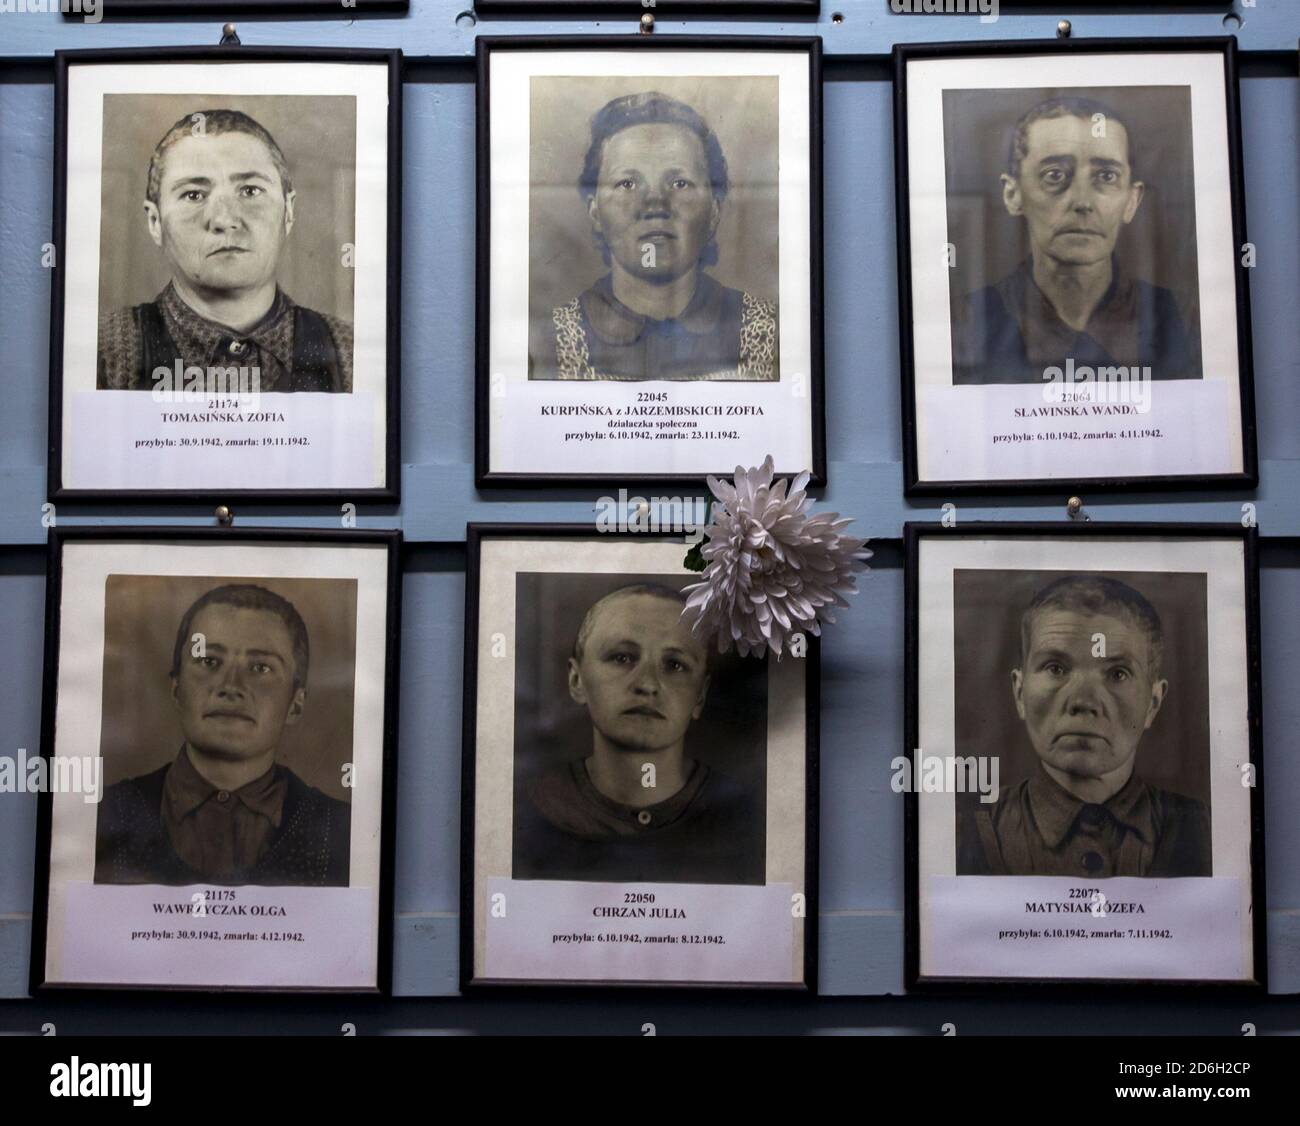 Ritratti di persone sterminate al Museo statale Auschwitz-Birkenau di Oswiecim in Polonia nel 1942. Foto Stock